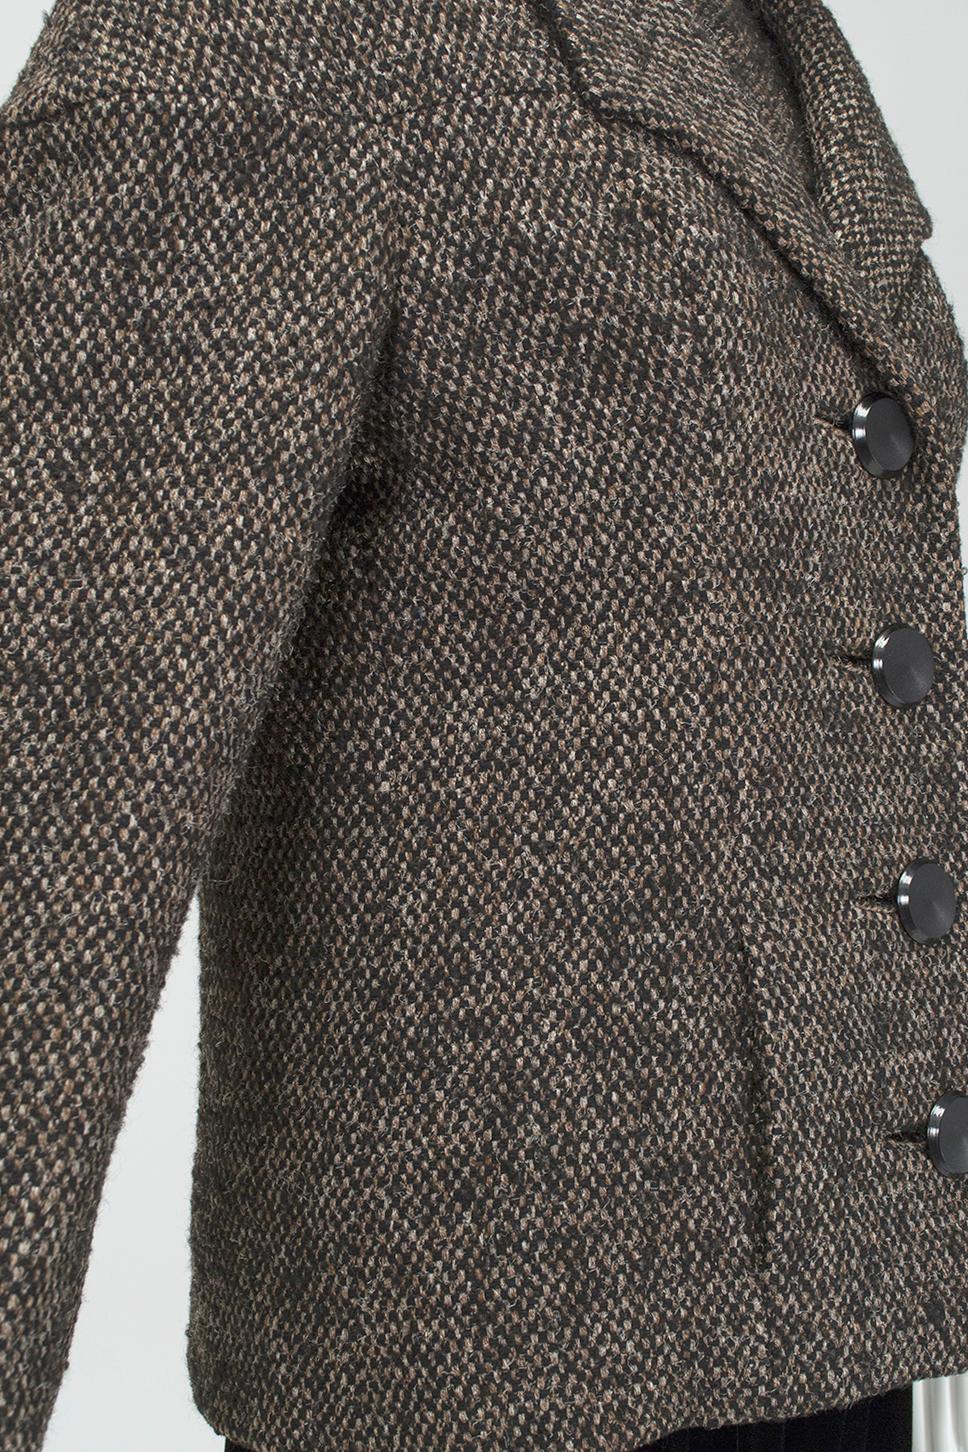 Black James Galanos Brown Tweed Jacket w Matching Sleeveless Fringe Top - M, 1980s For Sale